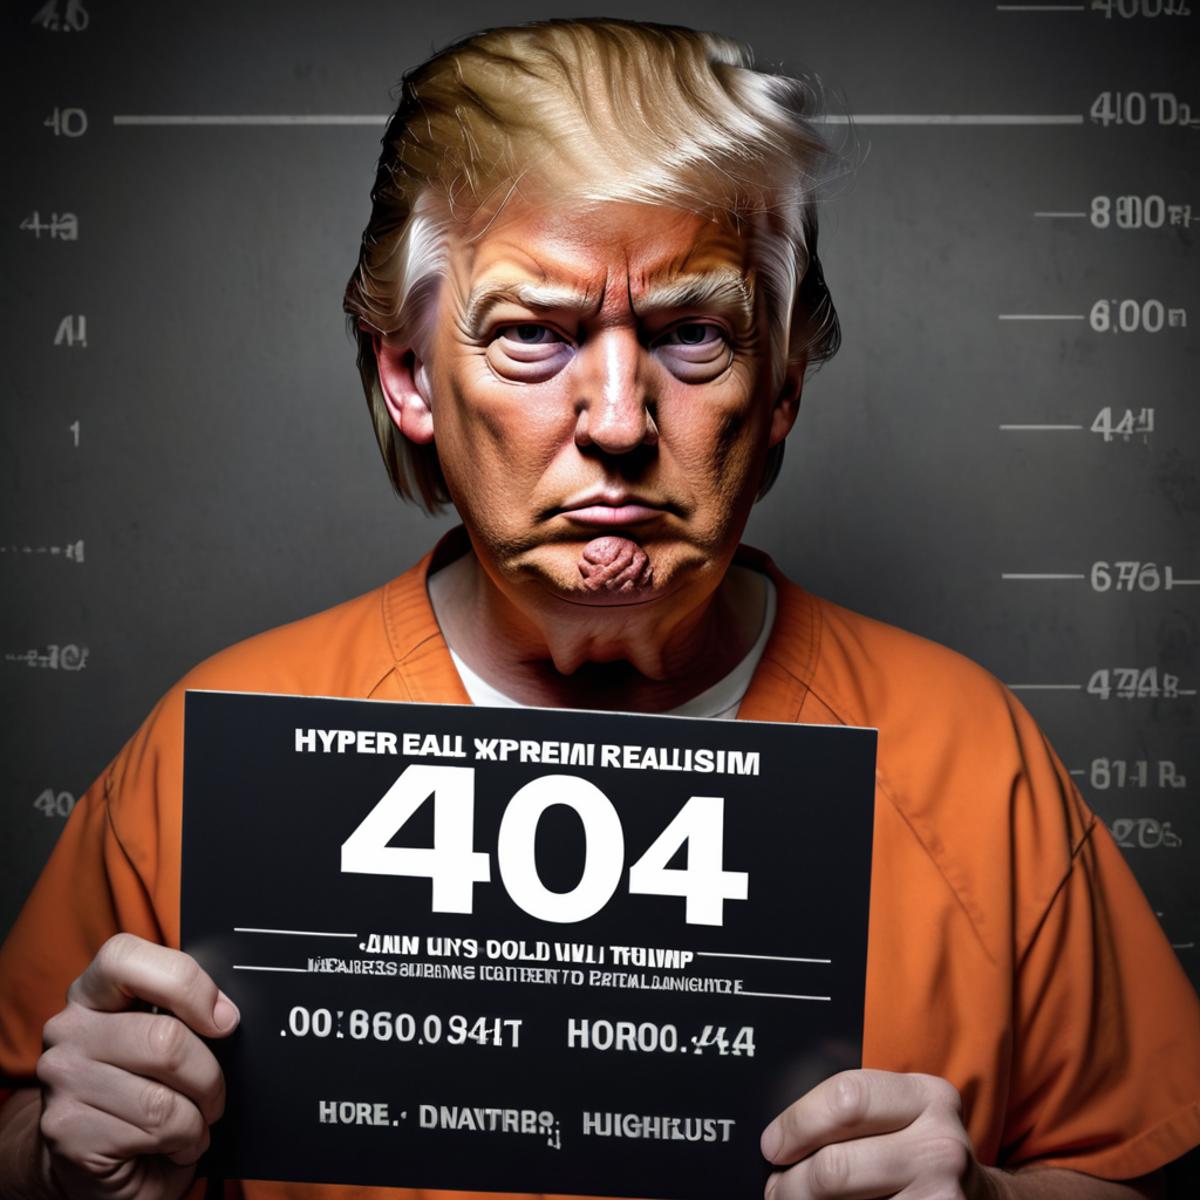 A mug shot of Donald Trump with a "404" error message.